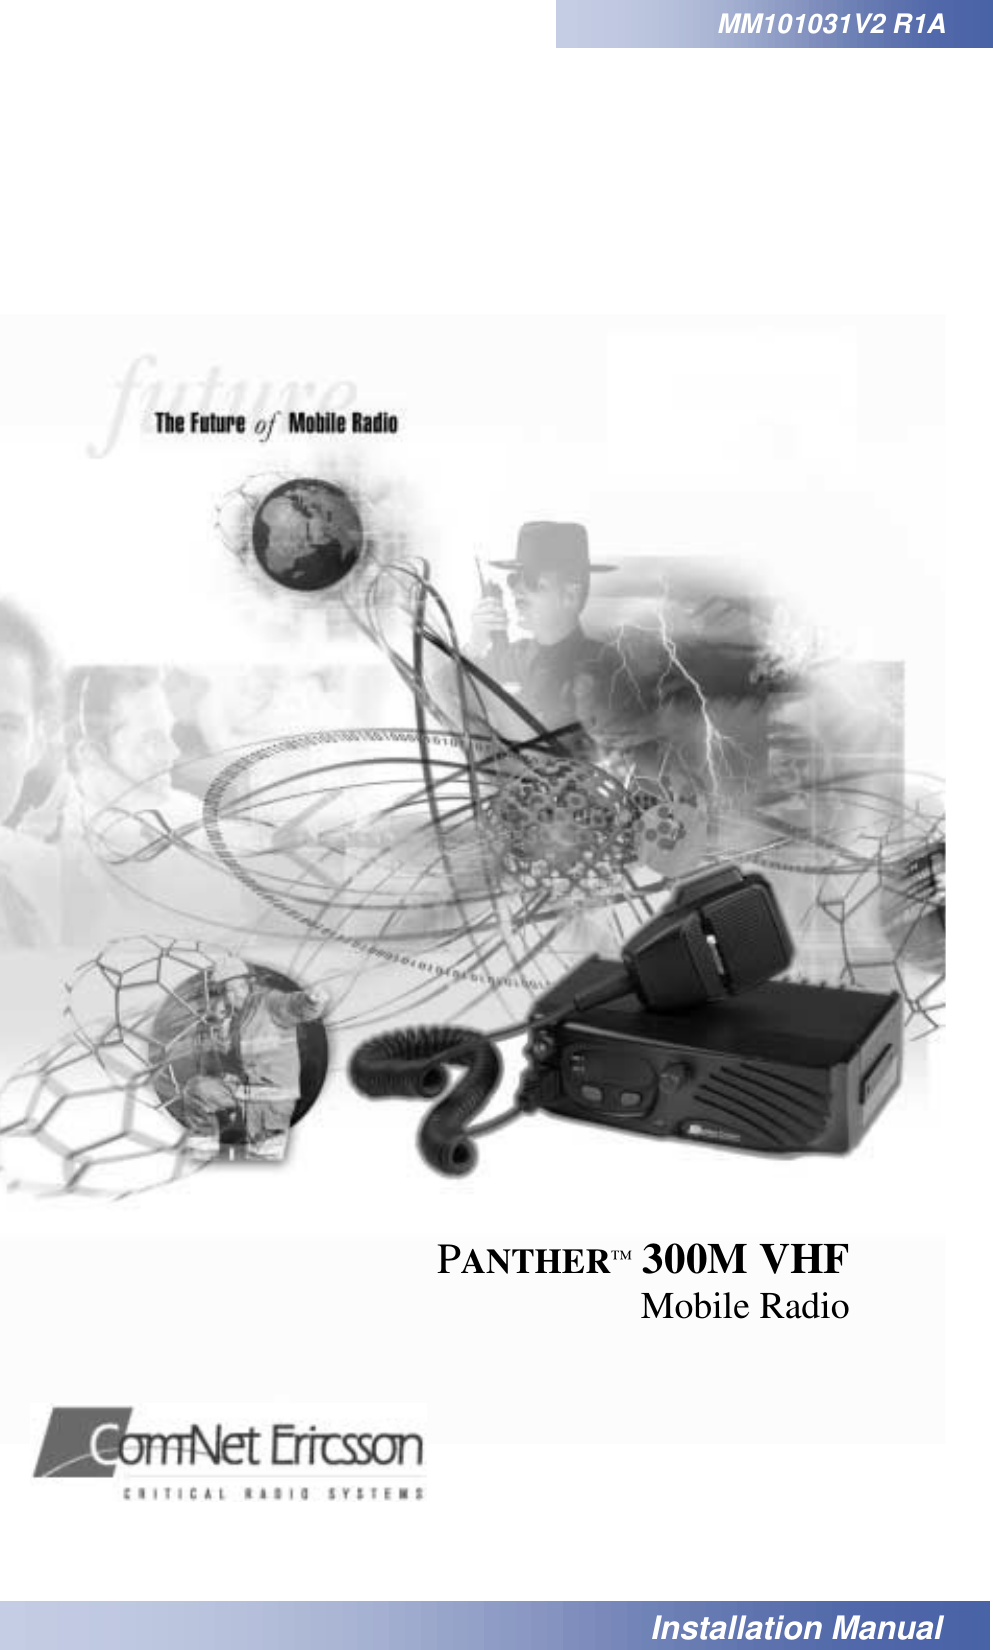 MM101031V2 R1APANTHER™ 300M VHFMobile RadioInstallation Manual